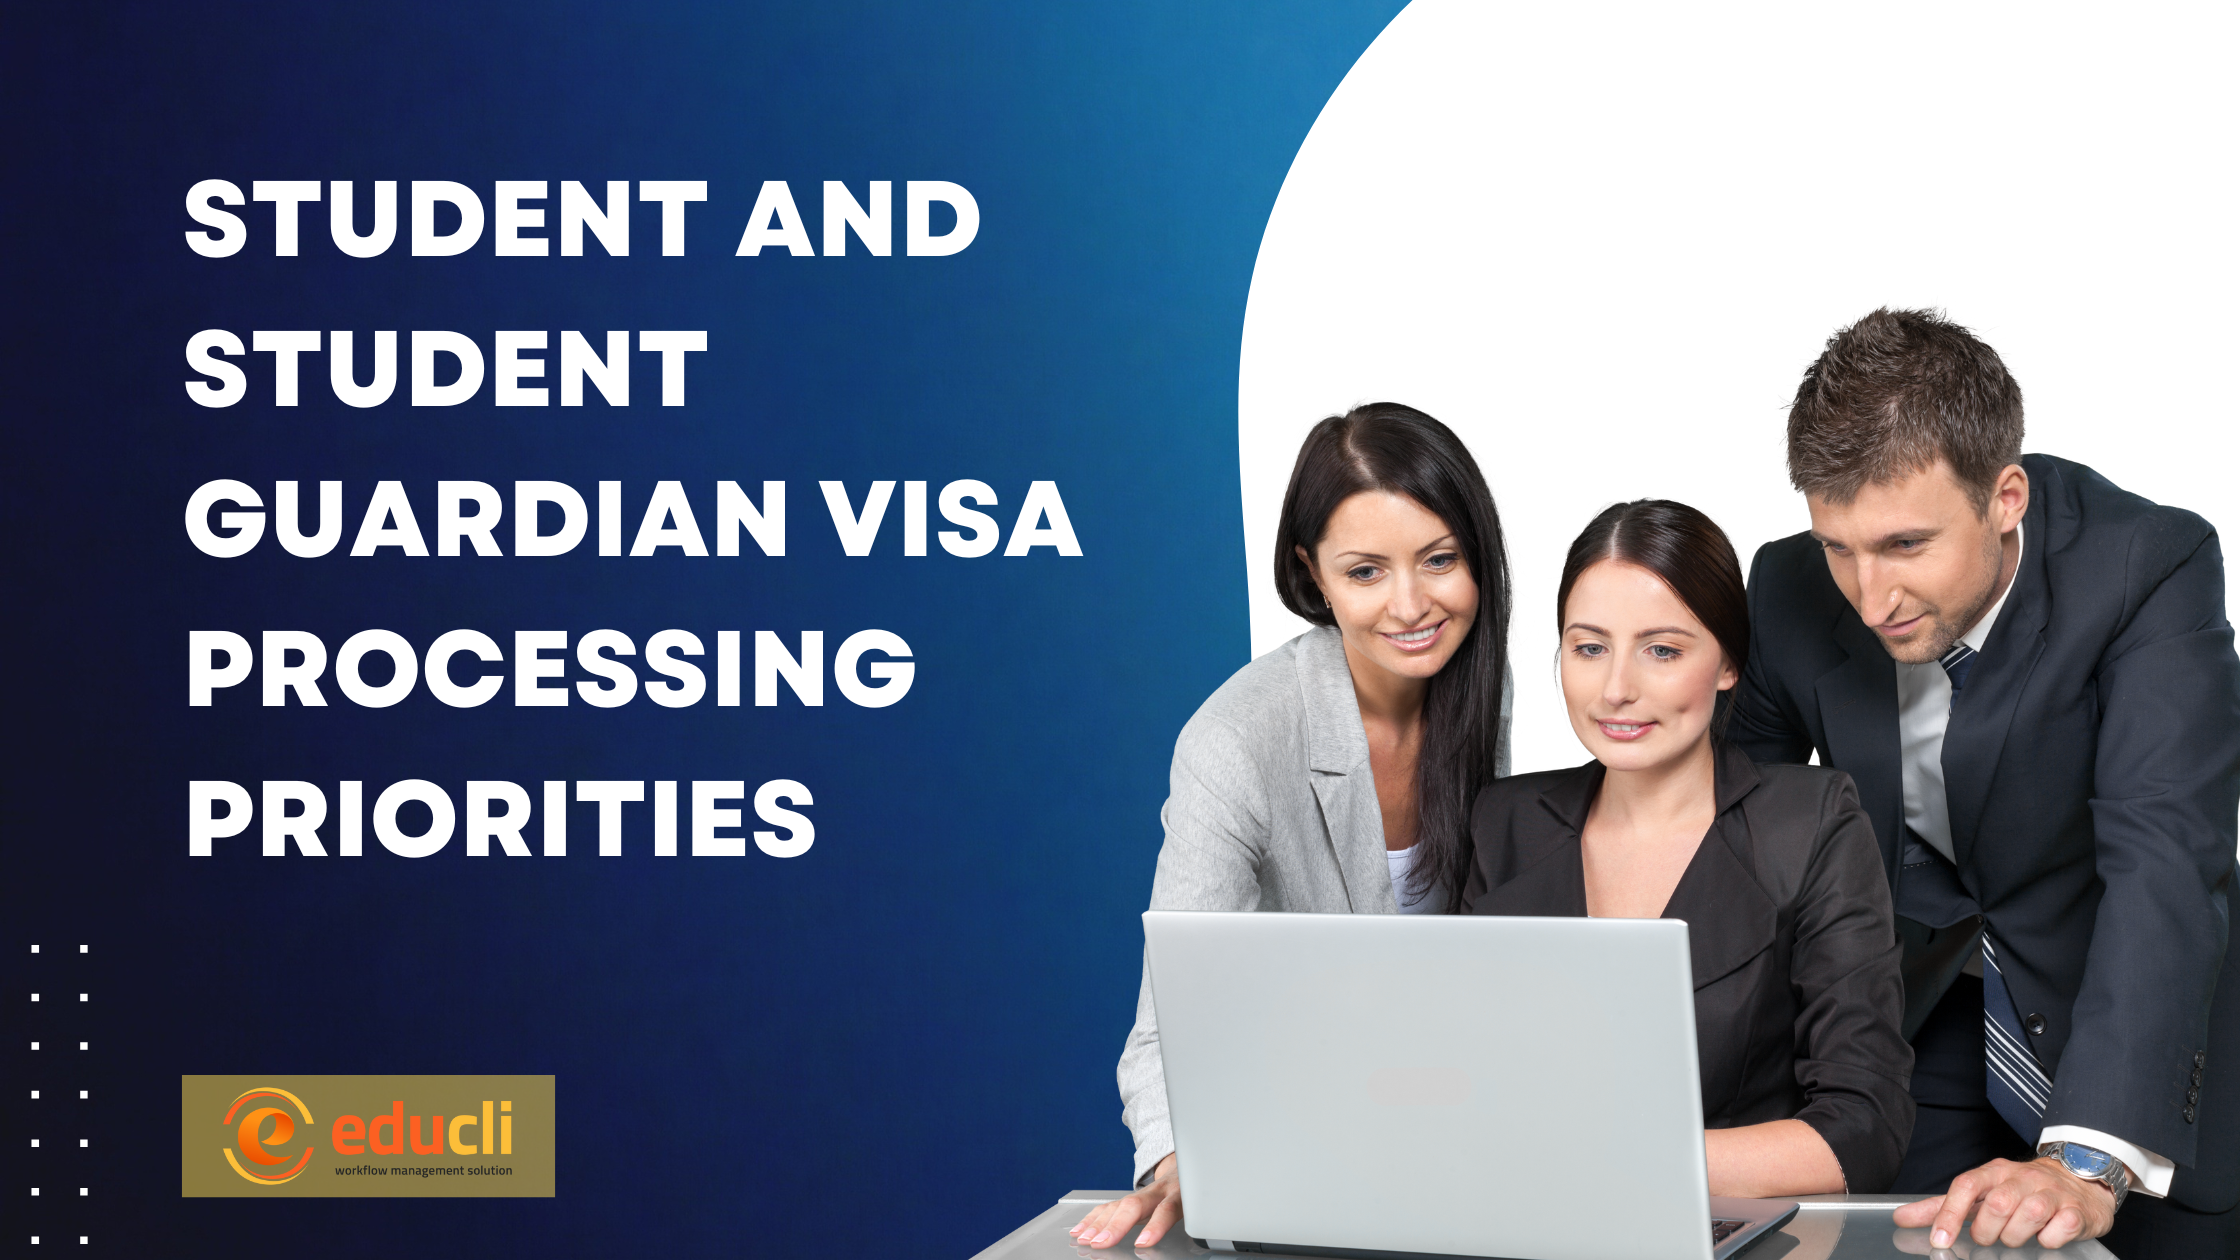 Student and Student Guardian visa processing priorities